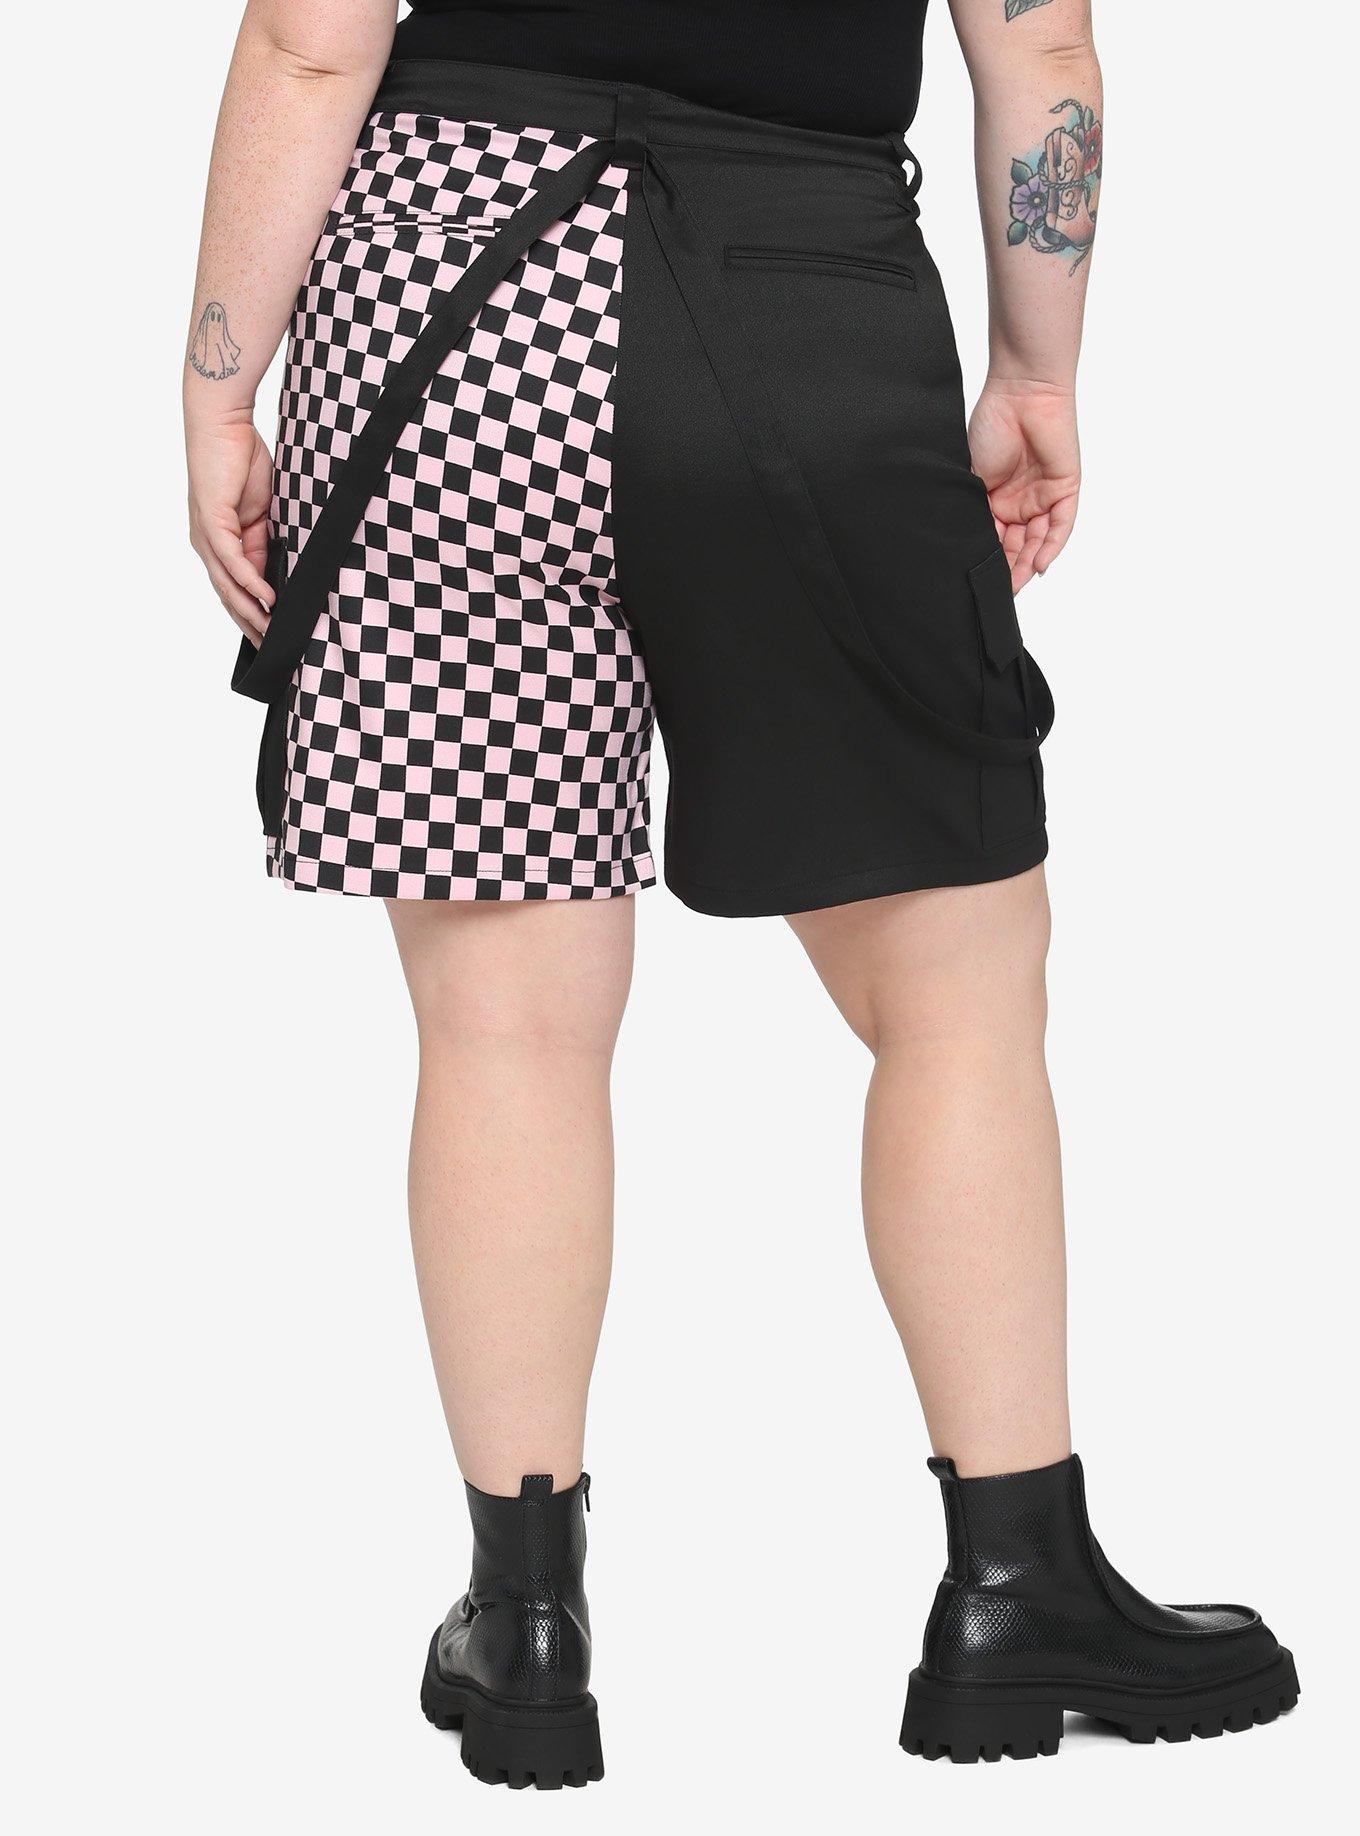 Black & Pink Split Checkered Suspender Shorts Plus Size, LIGHT PINK, alternate